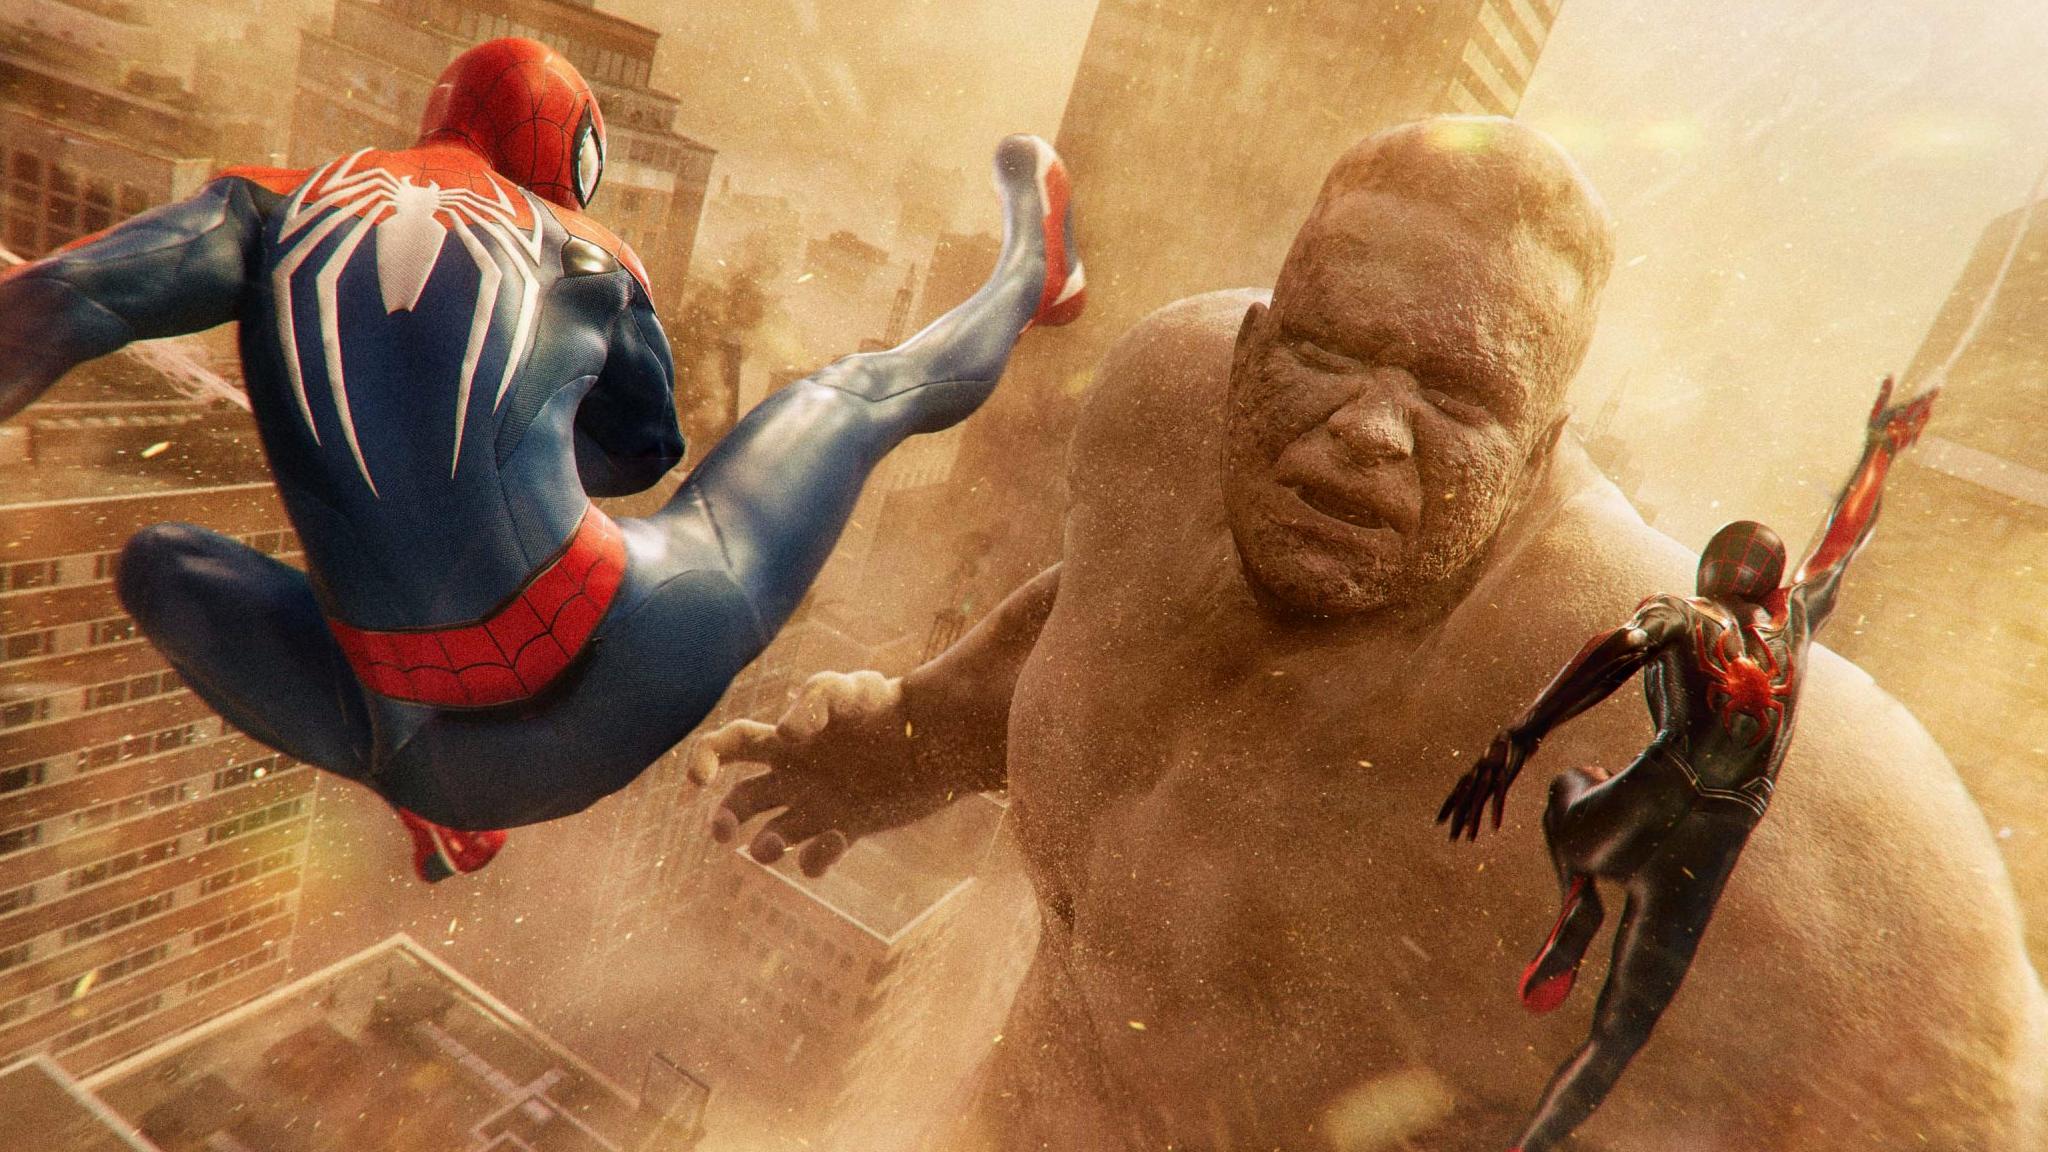 Торт человек паук. Spider man 2 Старая. Spider man images. Stark Expo | Marvel's Spider-man | s1 e9 ￼ Marvel hq.